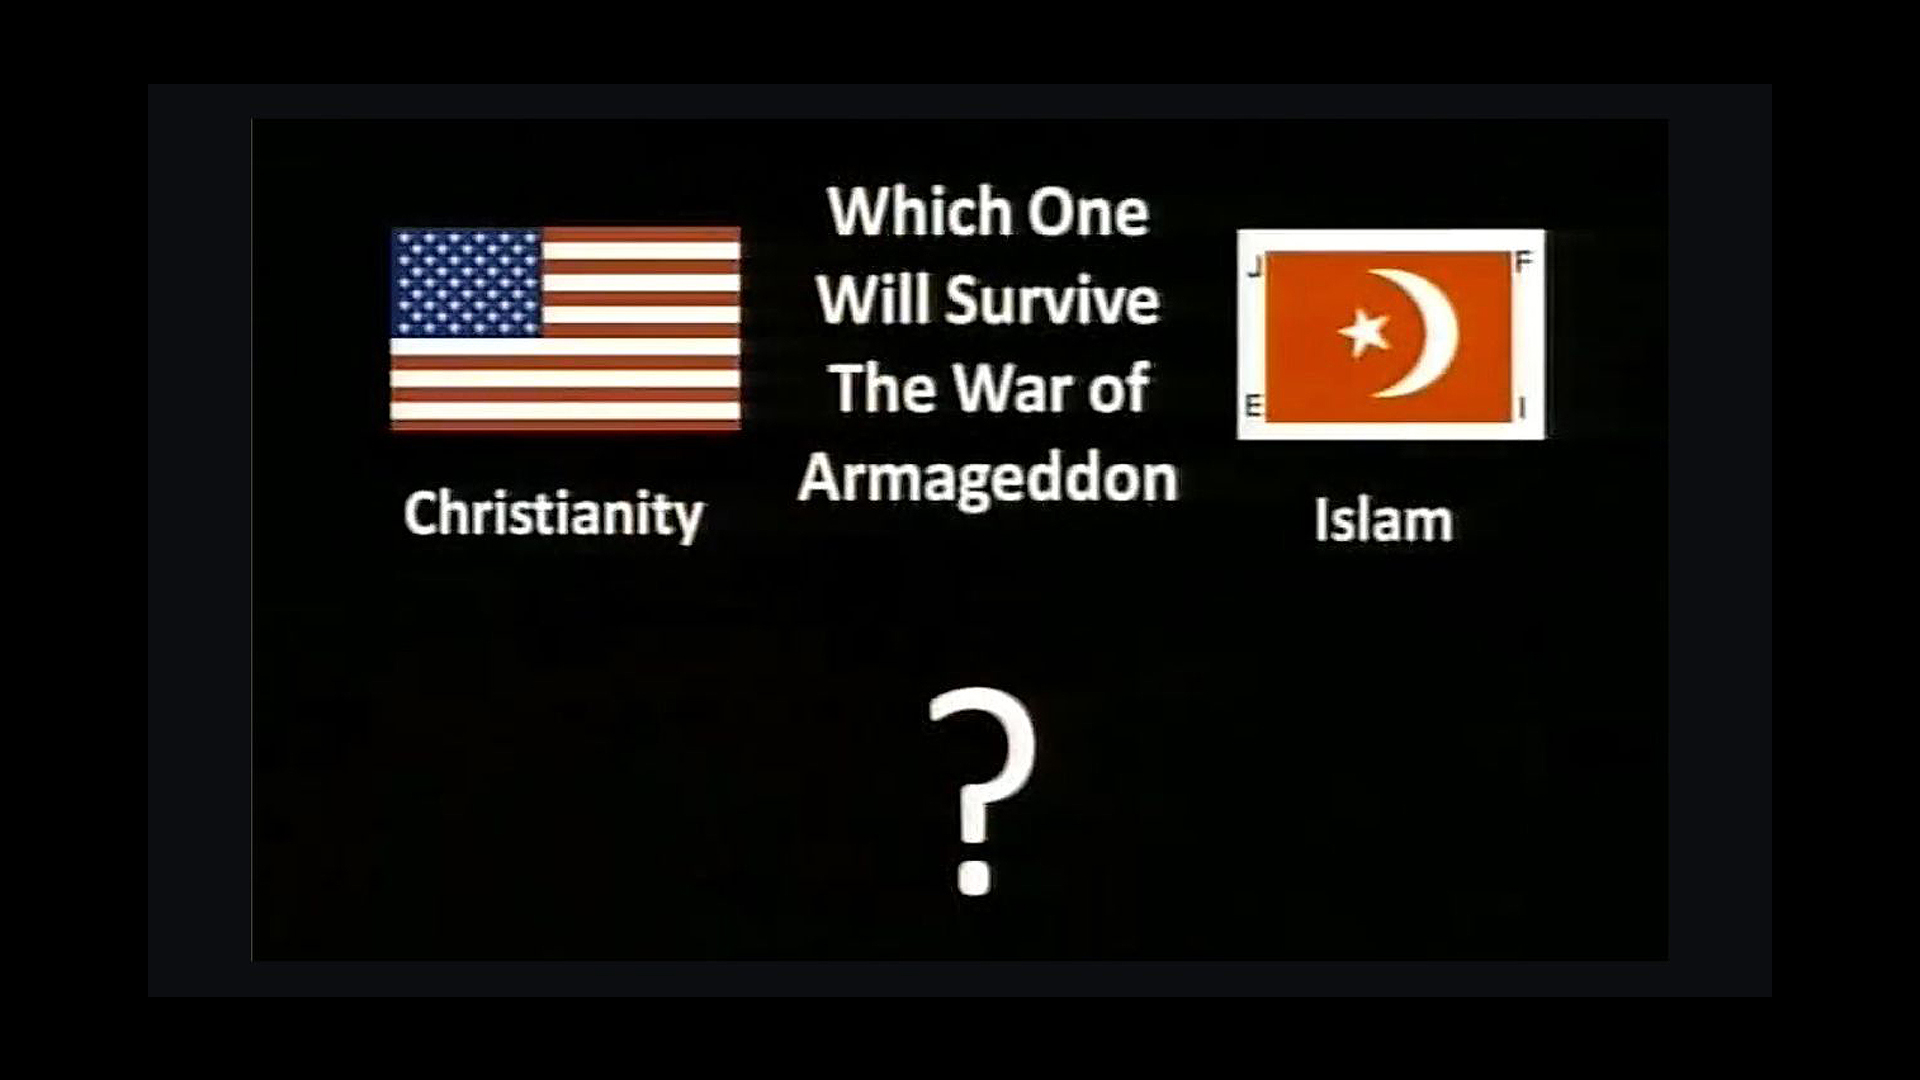 The War of Armageddon: Minister Farrakhan speaks on America and Islam